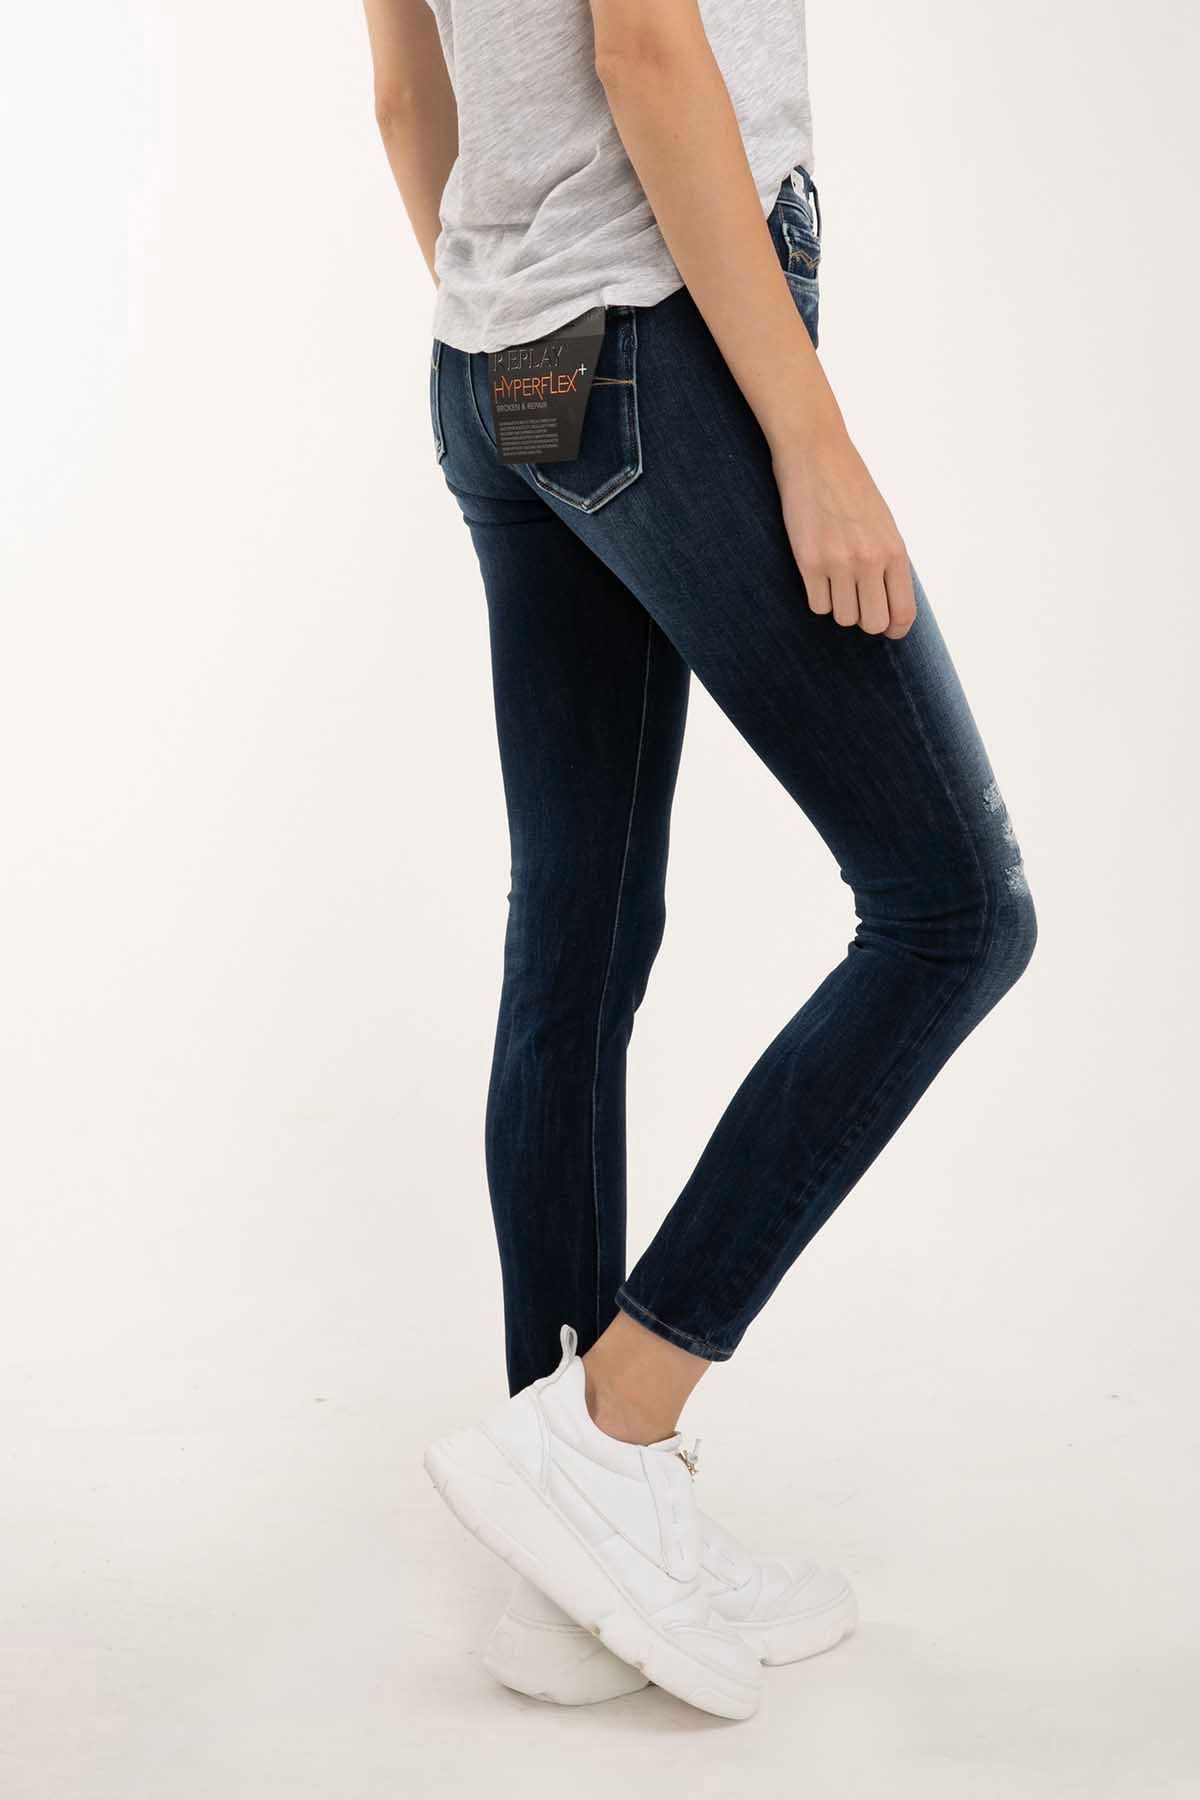 Replay Hyperflex Skinny Fit Jeans-Libas Trendy Fashion Store